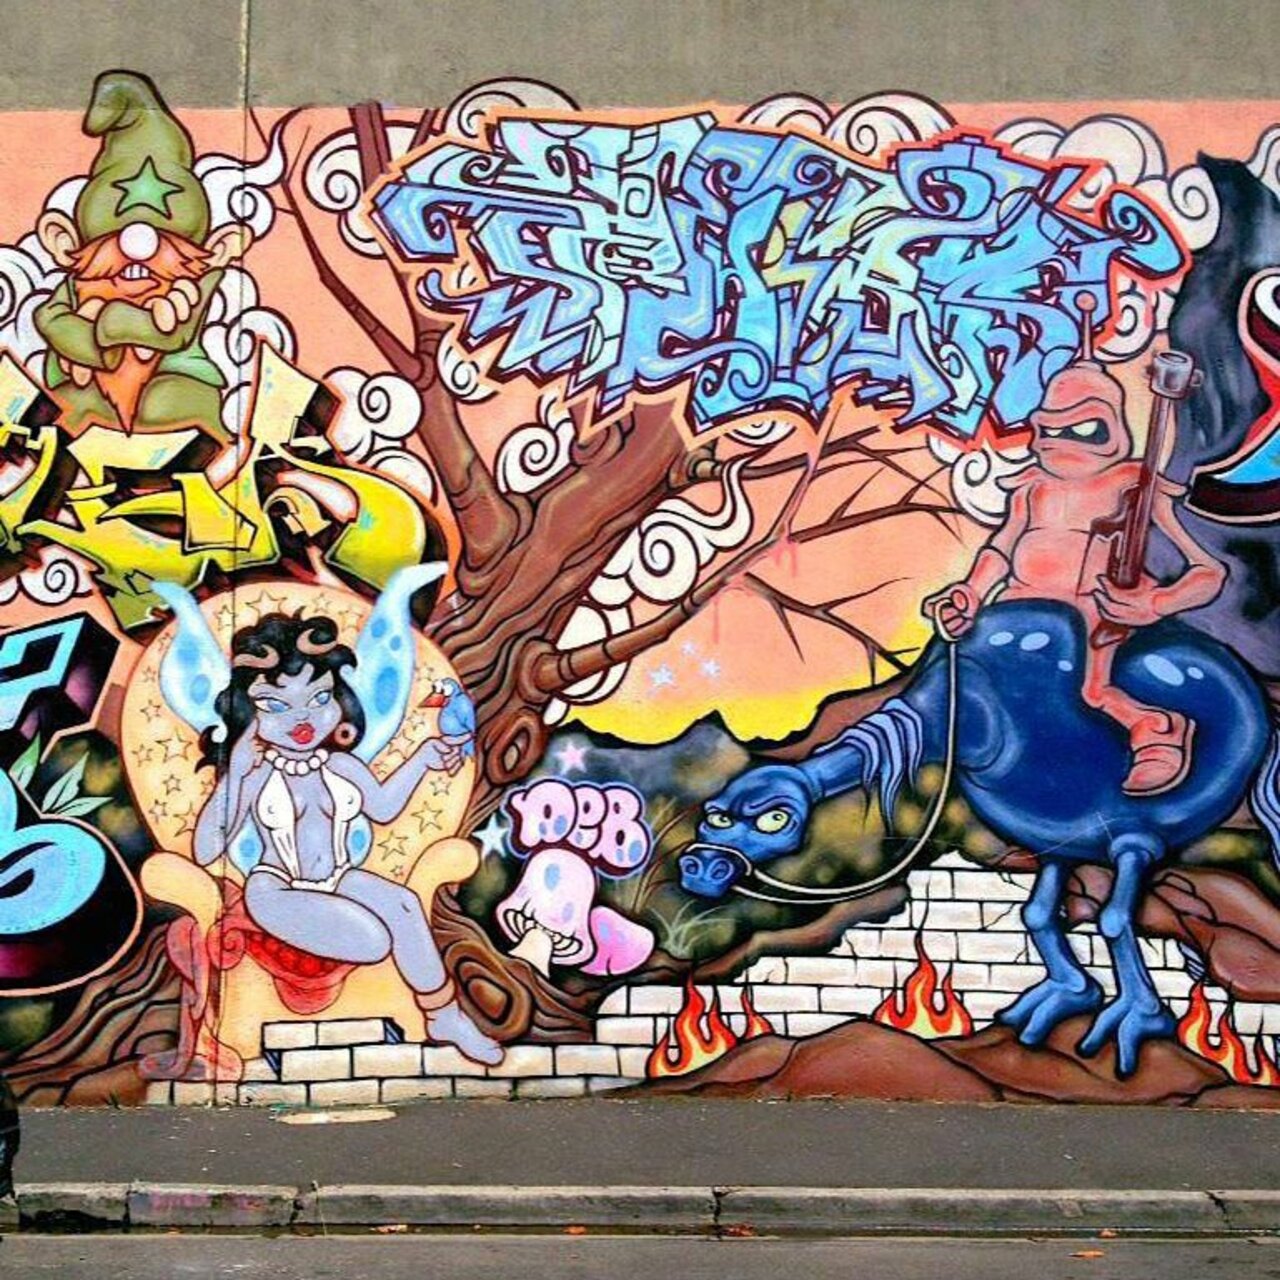 Wizards #streetart in Melbourne, Australia https://t.co/XdNCQLsZtD